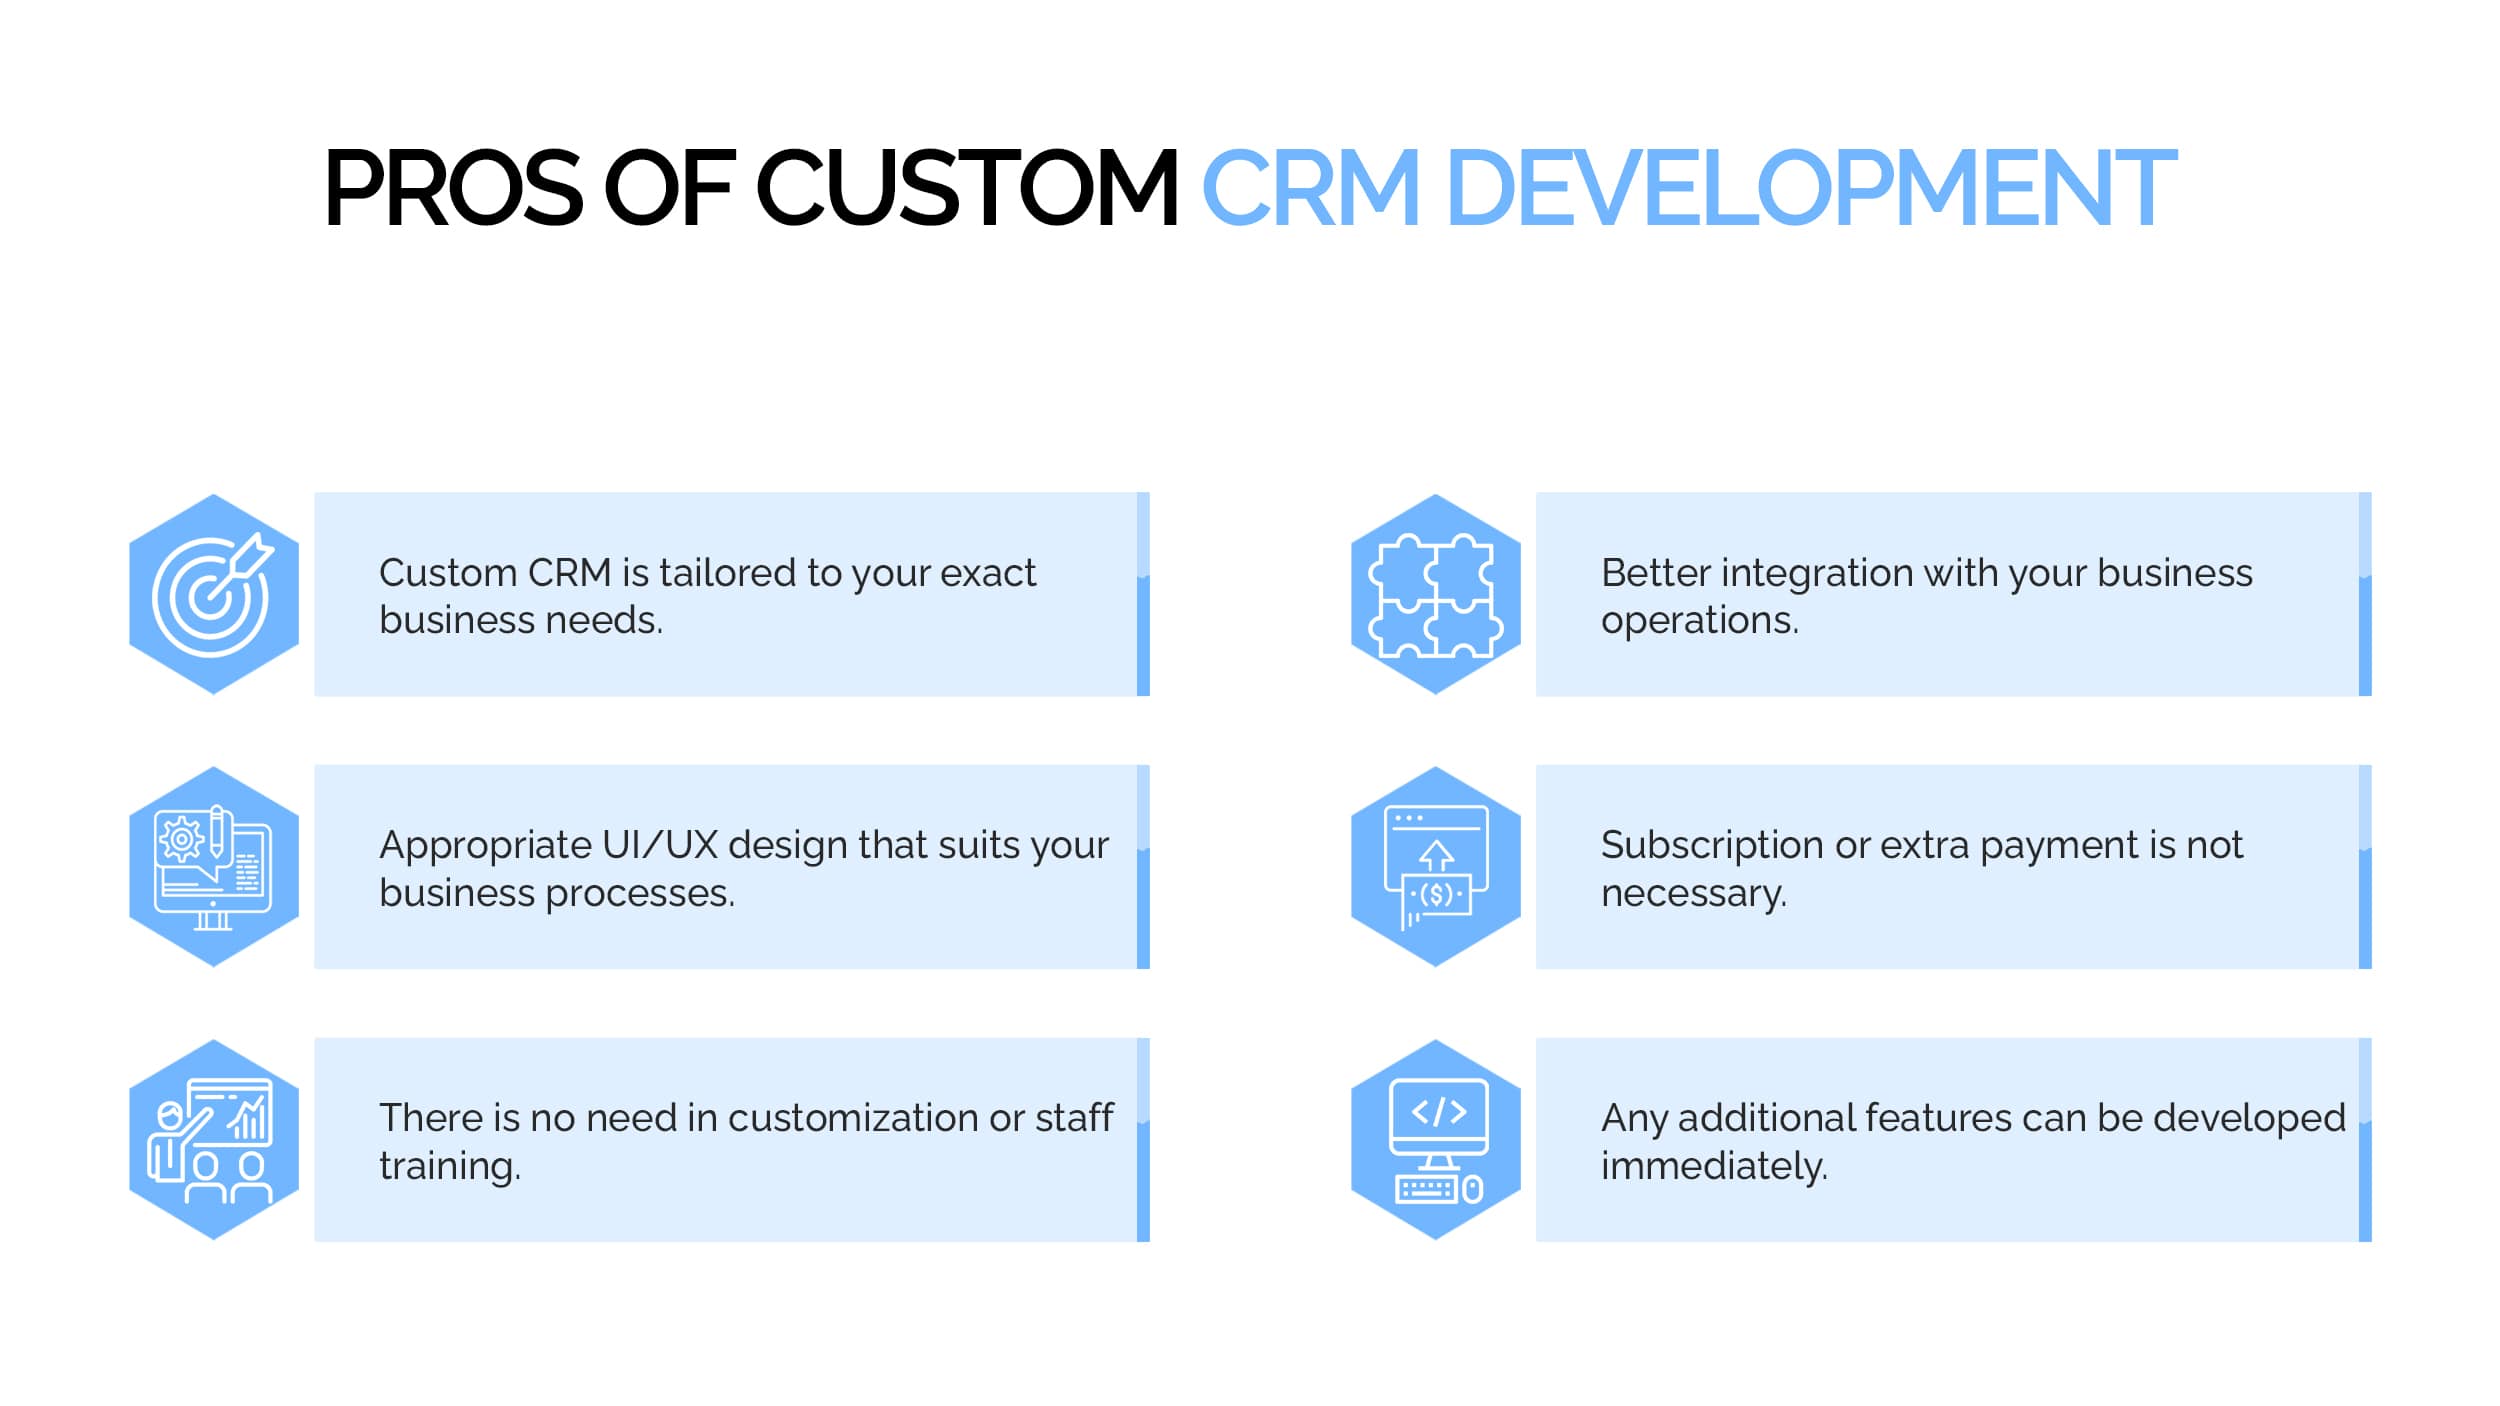 Pros of custom CRM Development